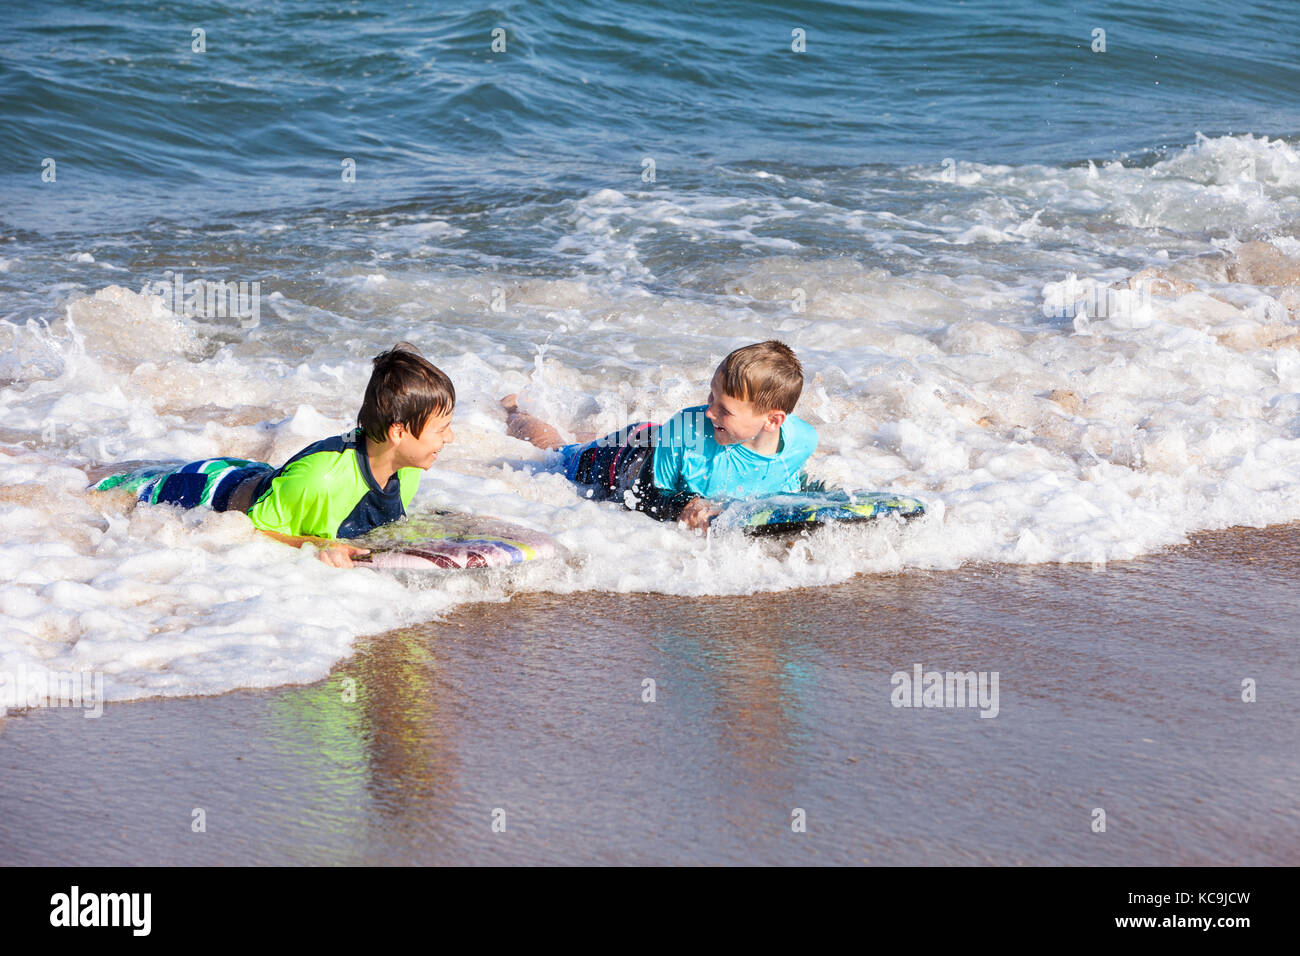 Avon, Outer Banks, North Carolina, USA. Pre-Jungs im Teenageralter im Atlantik surfen mit Boogie Boards. Stockfoto